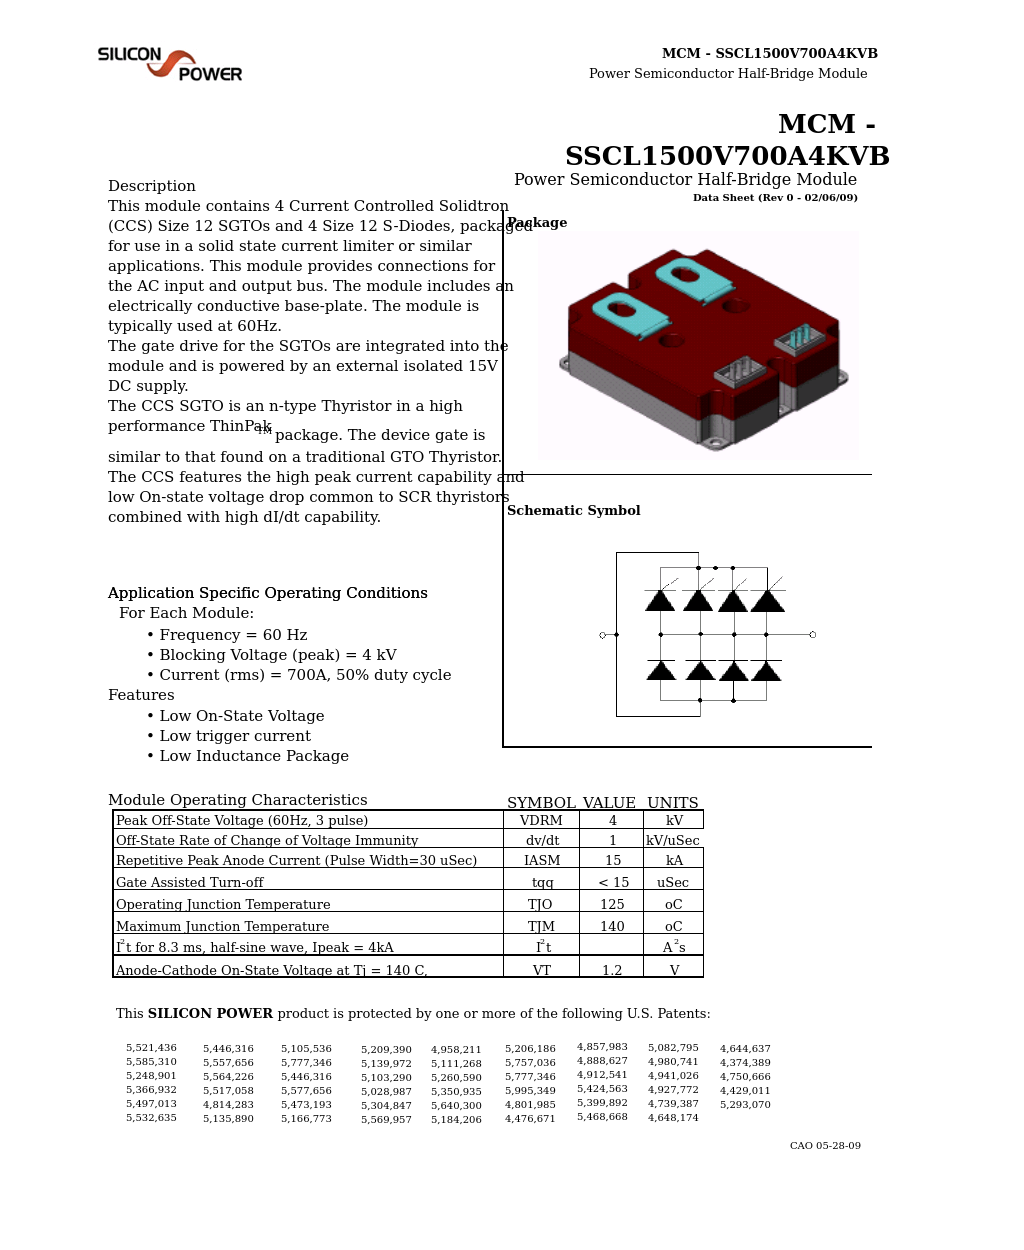 MCM SSCL 1500V 700A 4KVB_Power Semiconductor Half-Bridge Module